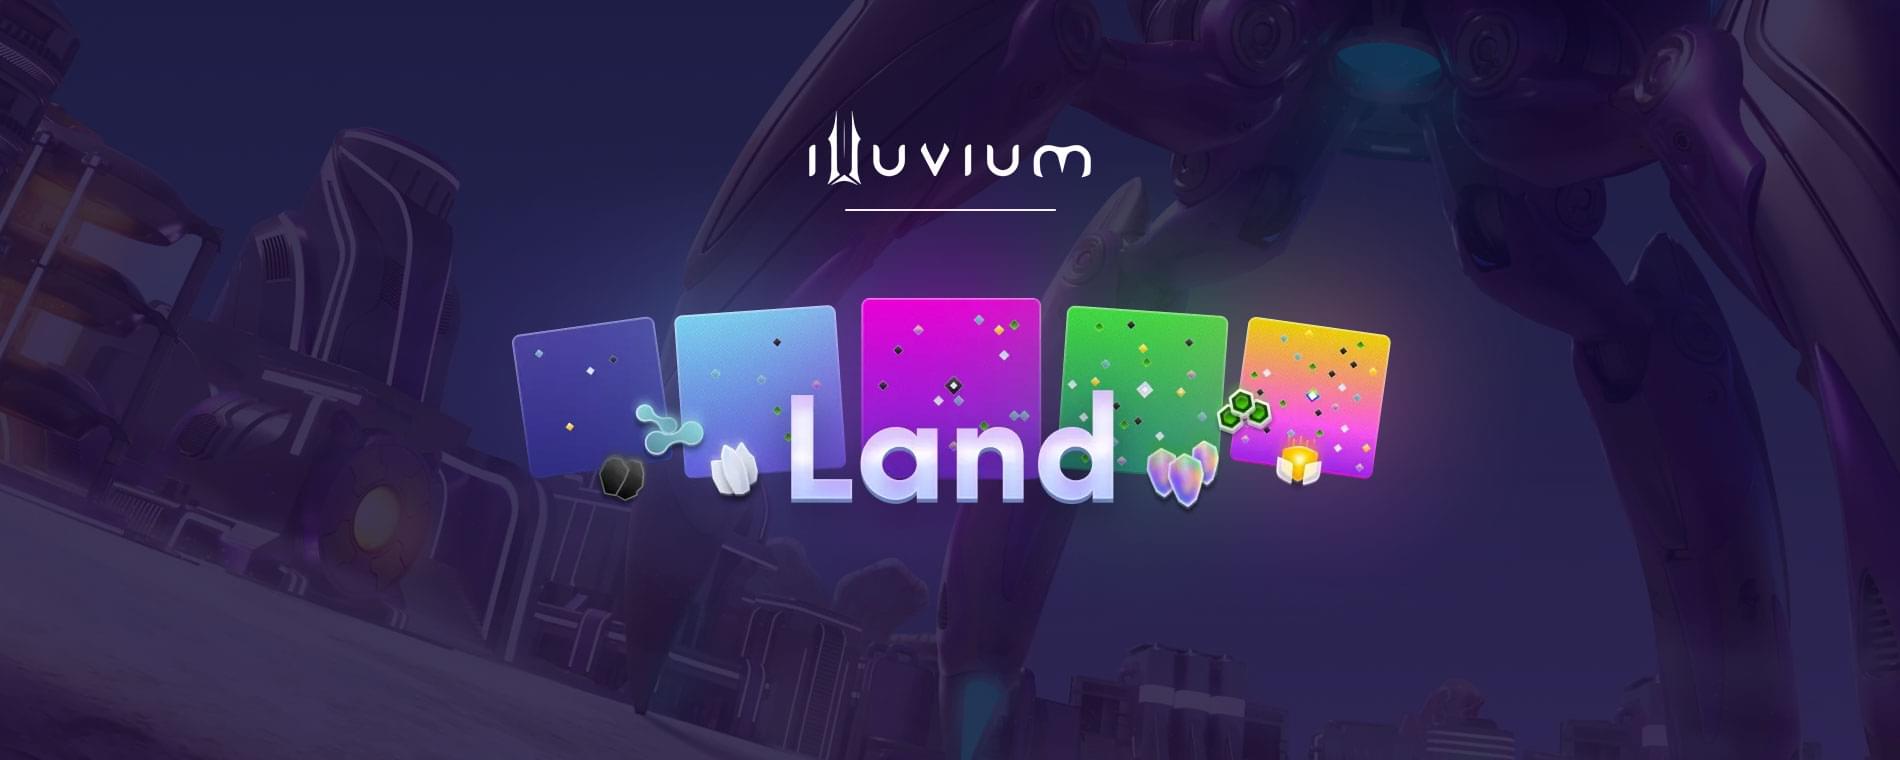 Illuvium defies bearish trend with $72 million digital land sale